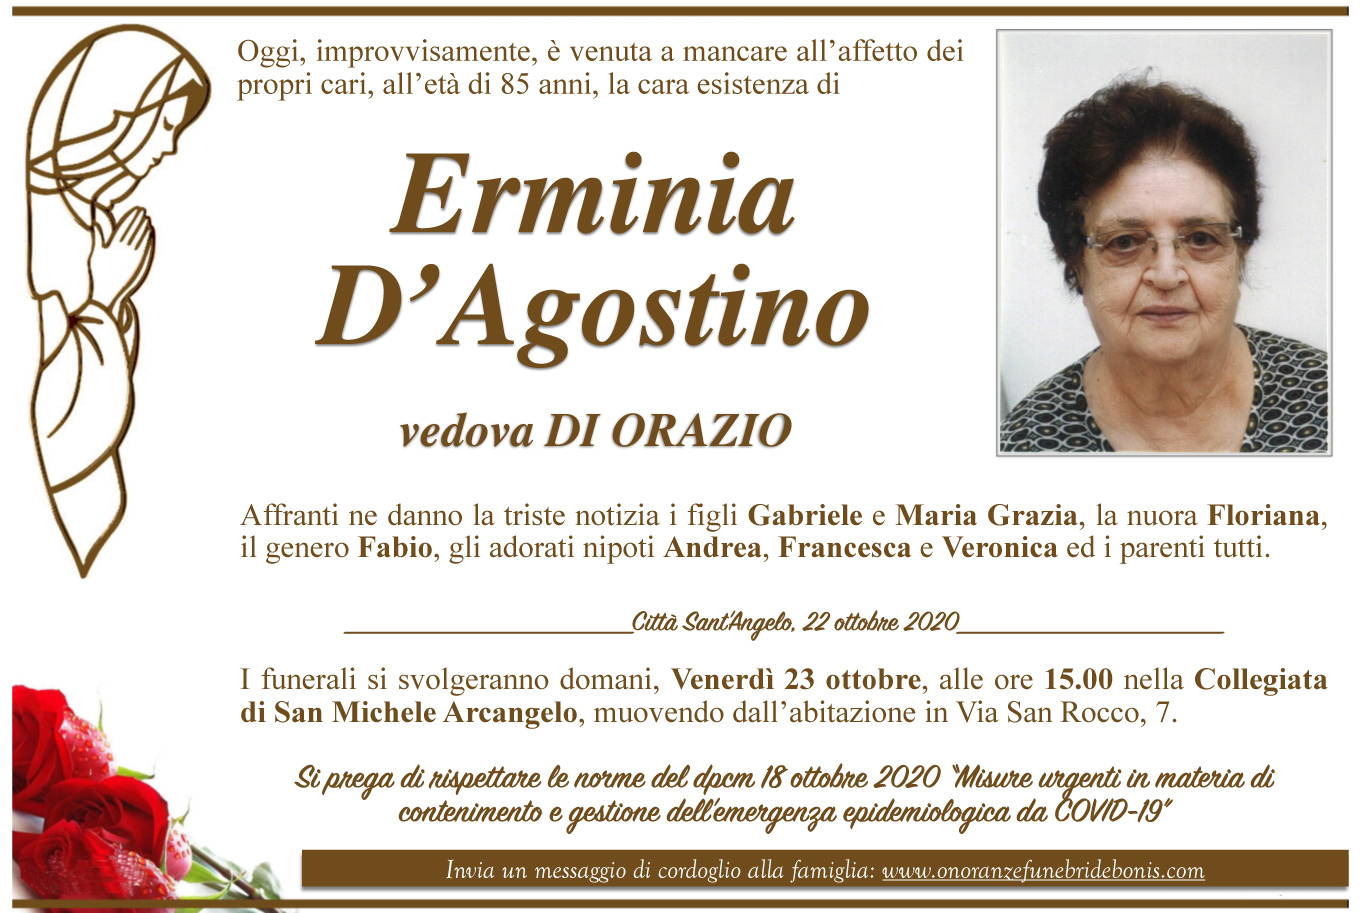 Erminia D'Agostino